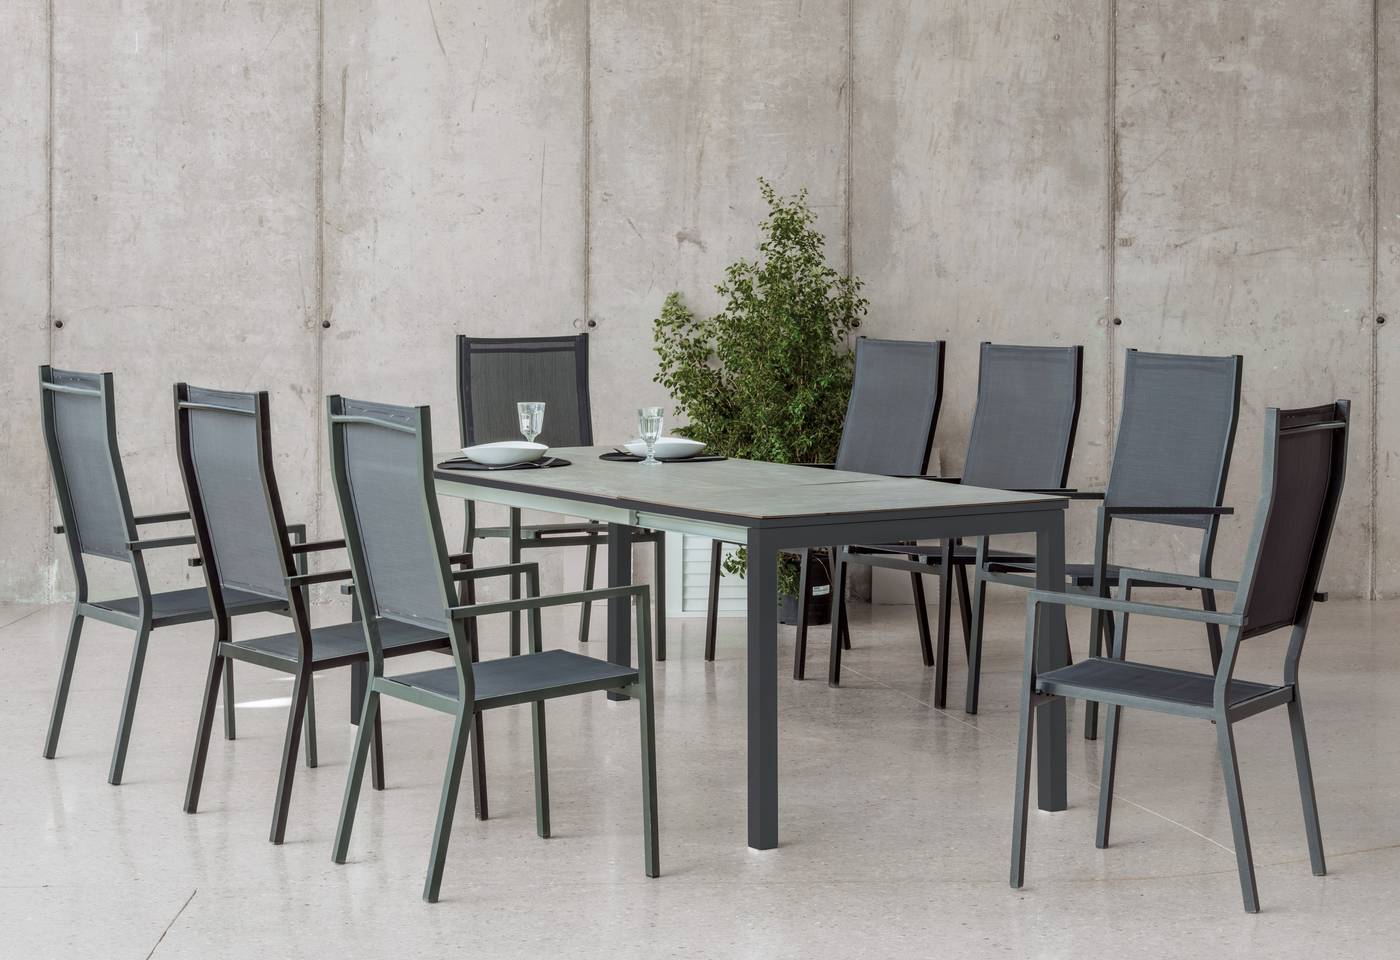 Conjunto de aluminio: mesa extensible con tablero HPL + 6 sillones altos de textilen. Disponible en color blanco o antracita.